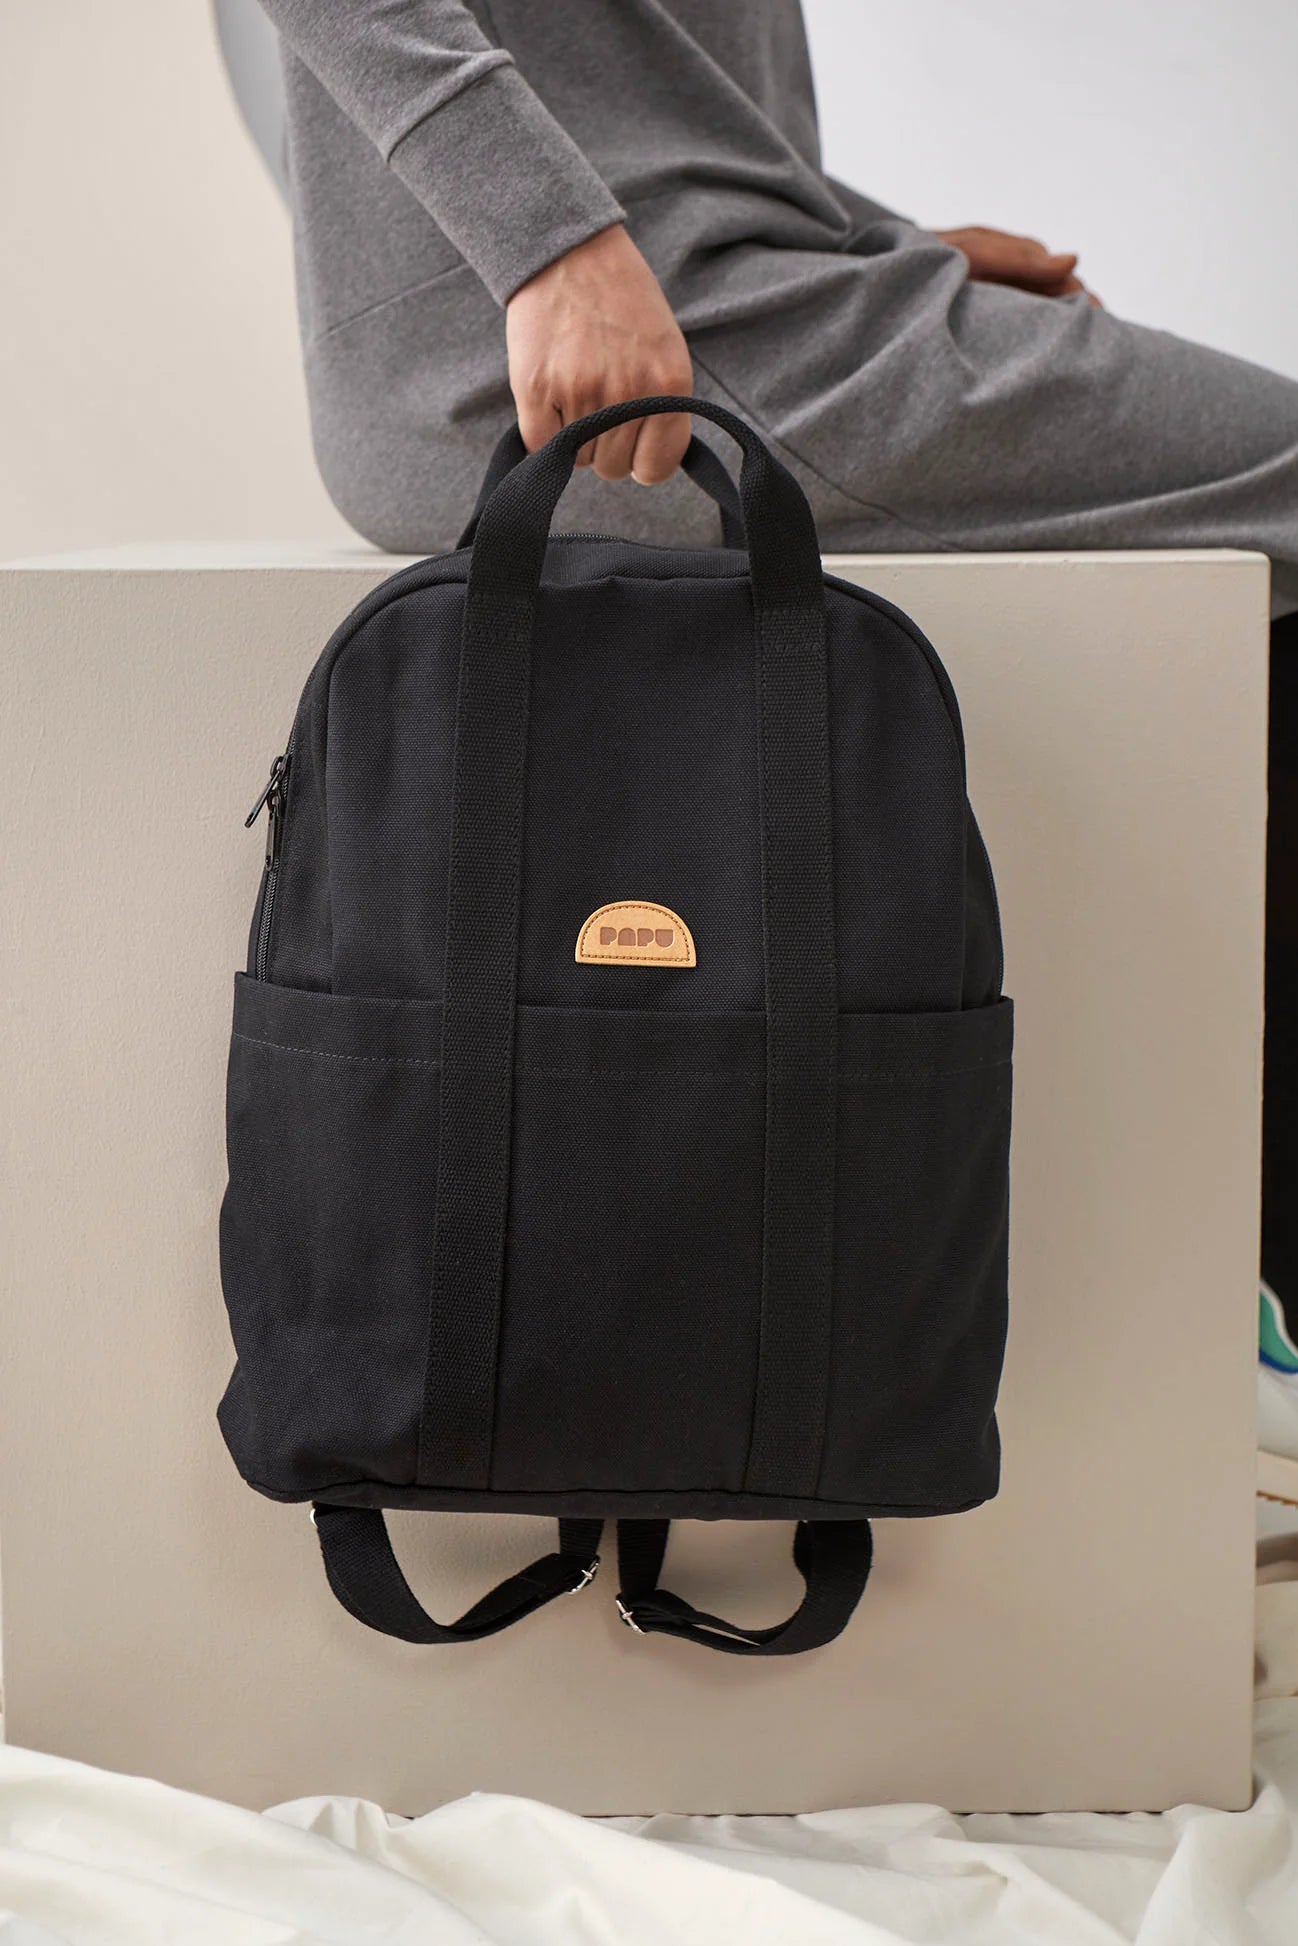 Papu Backpack, Black